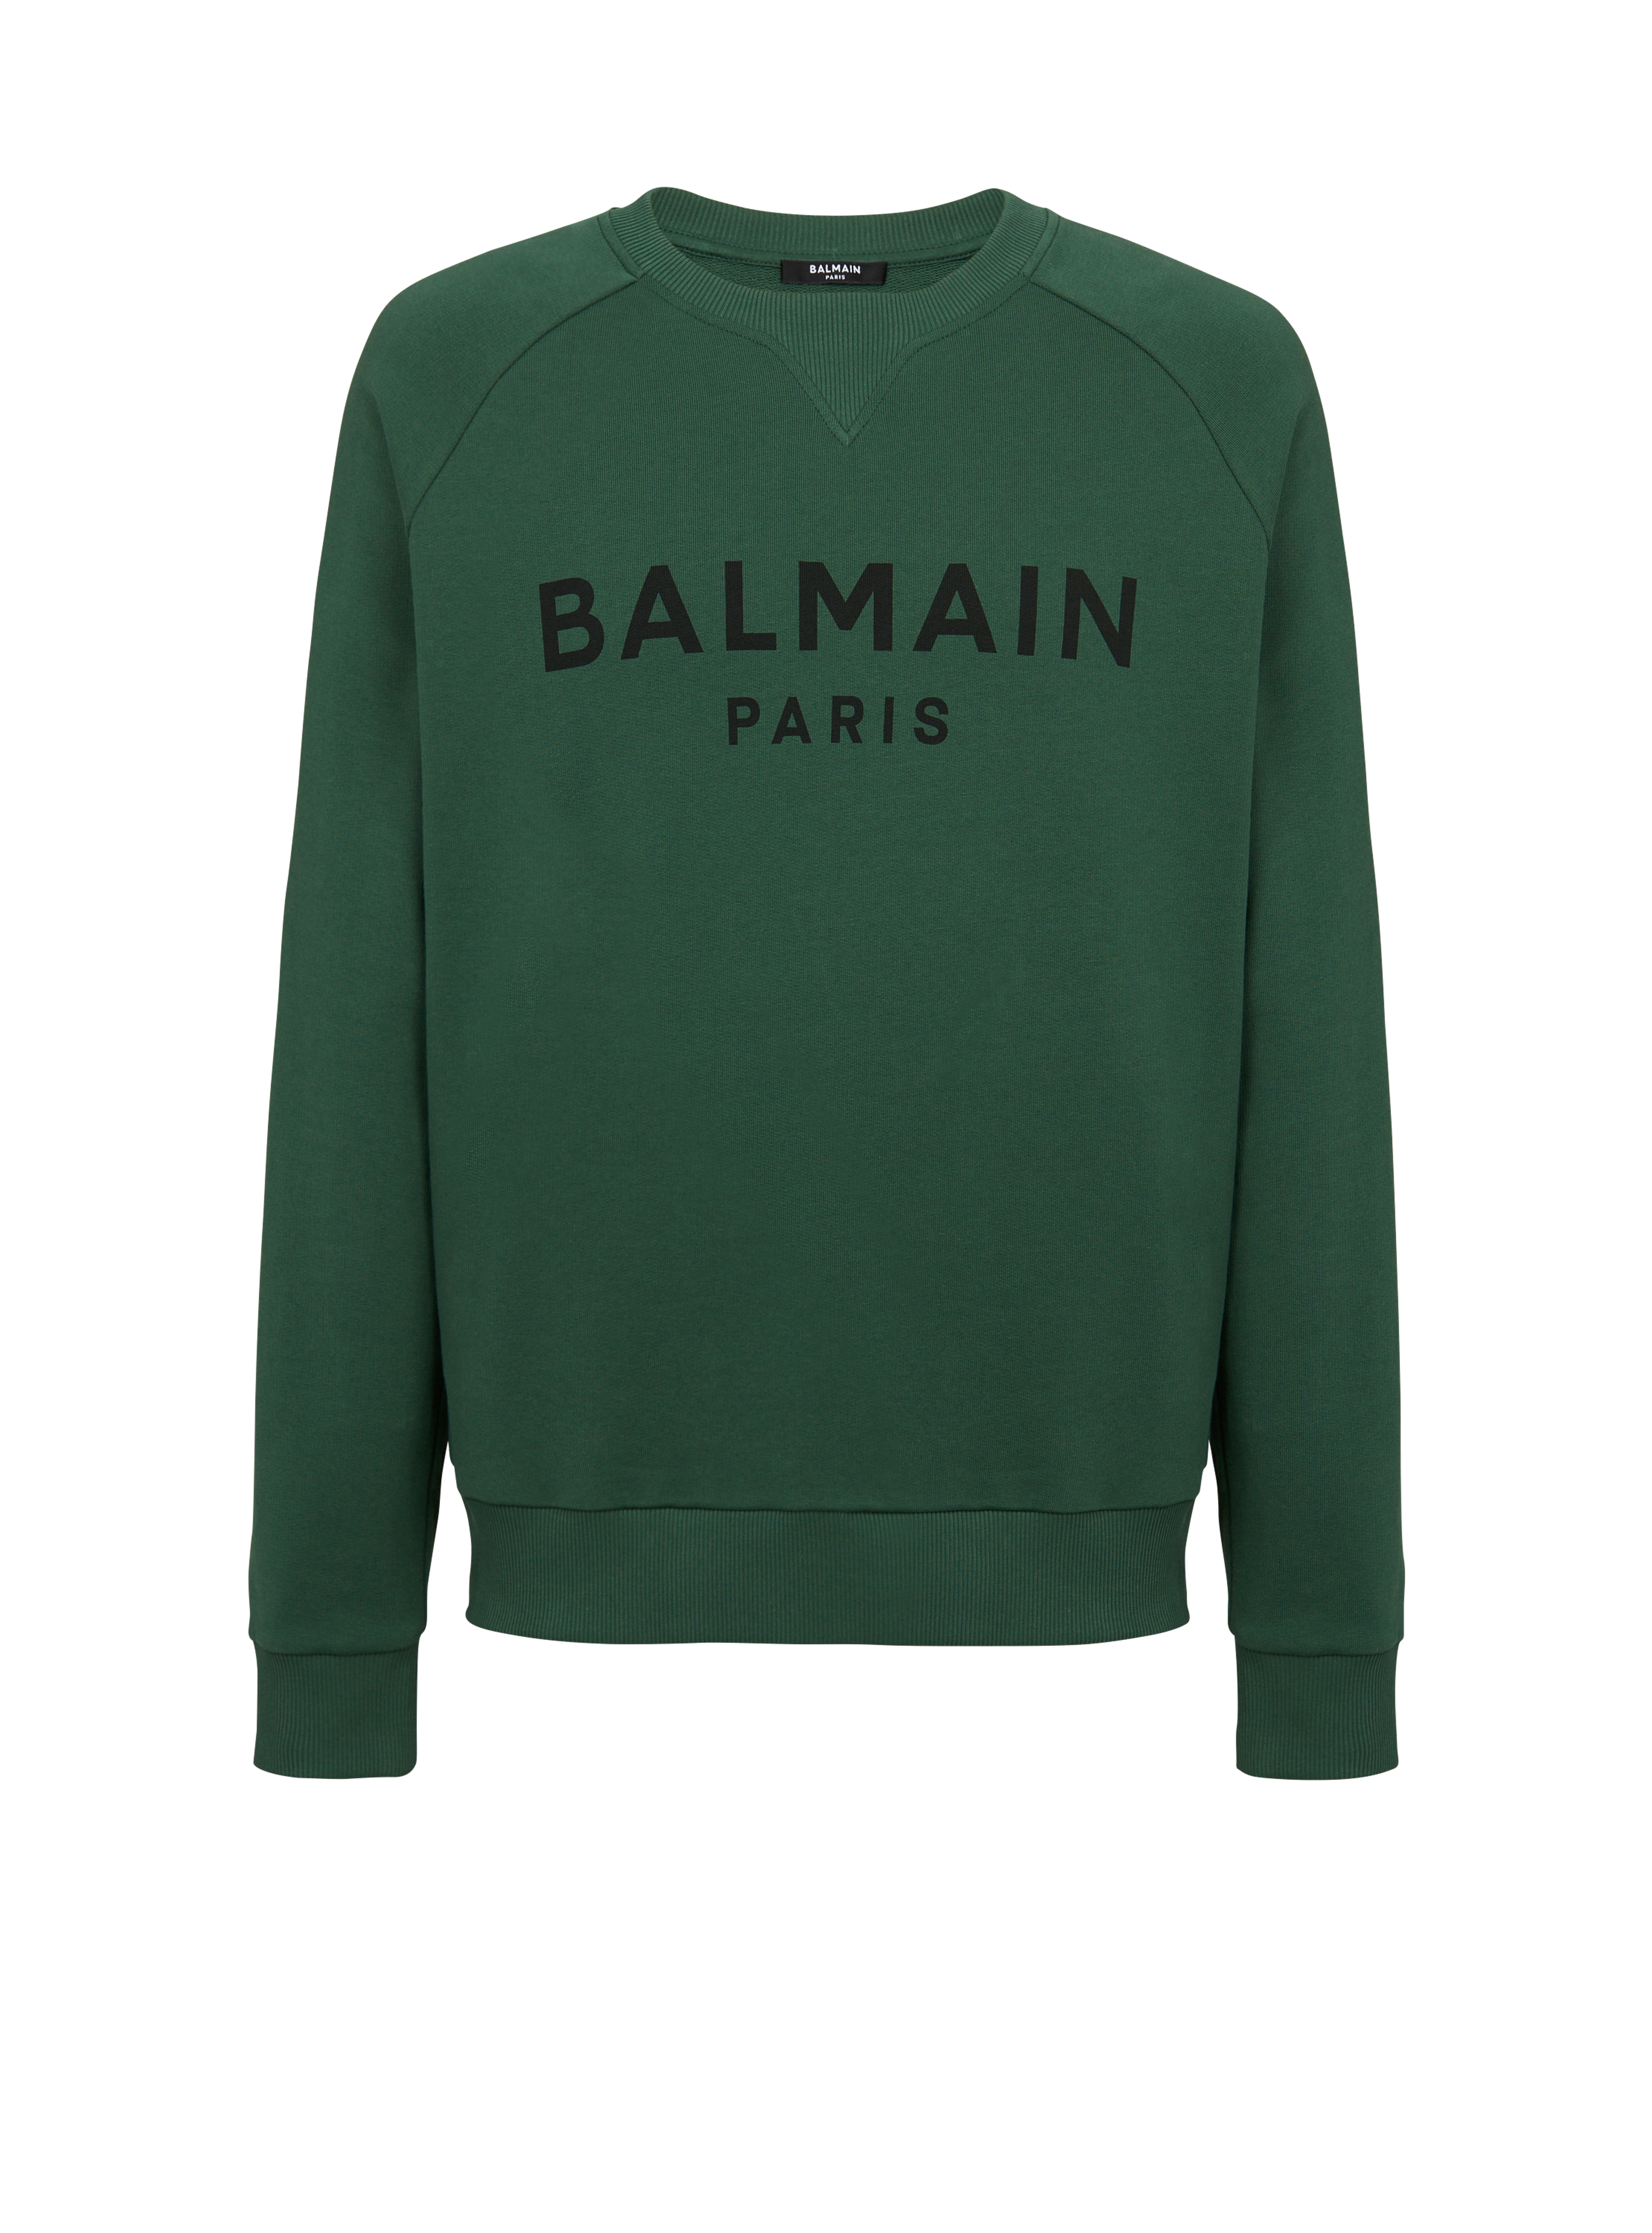 Felpa in cotone con logo Balmain Paris nero, verde